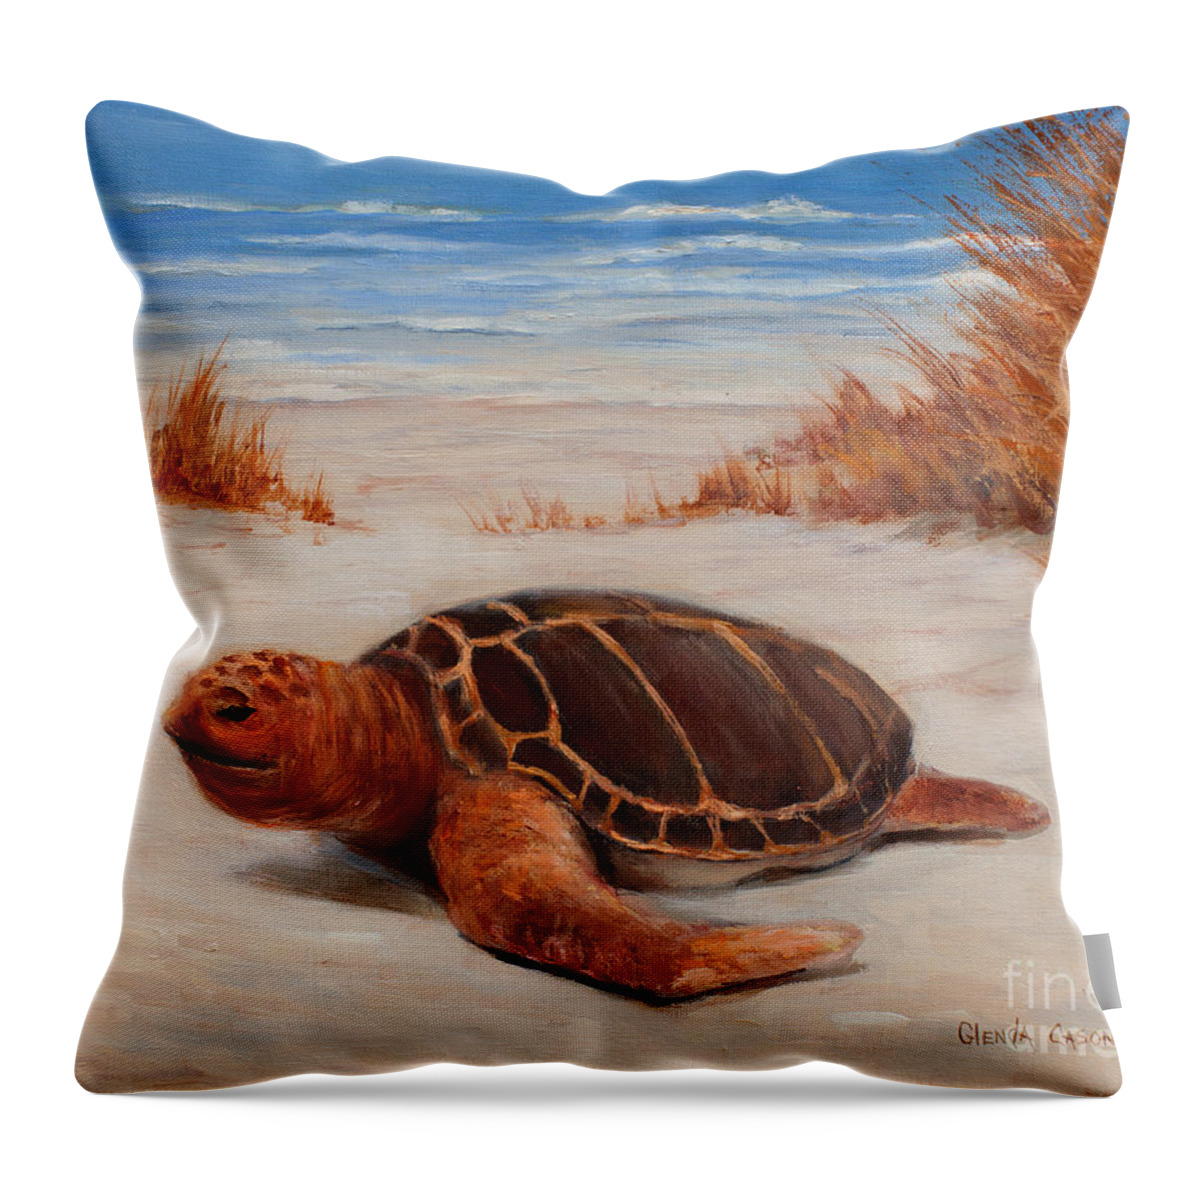 Turtle Throw Pillow featuring the painting Loggerhead Turtle by Glenda Cason